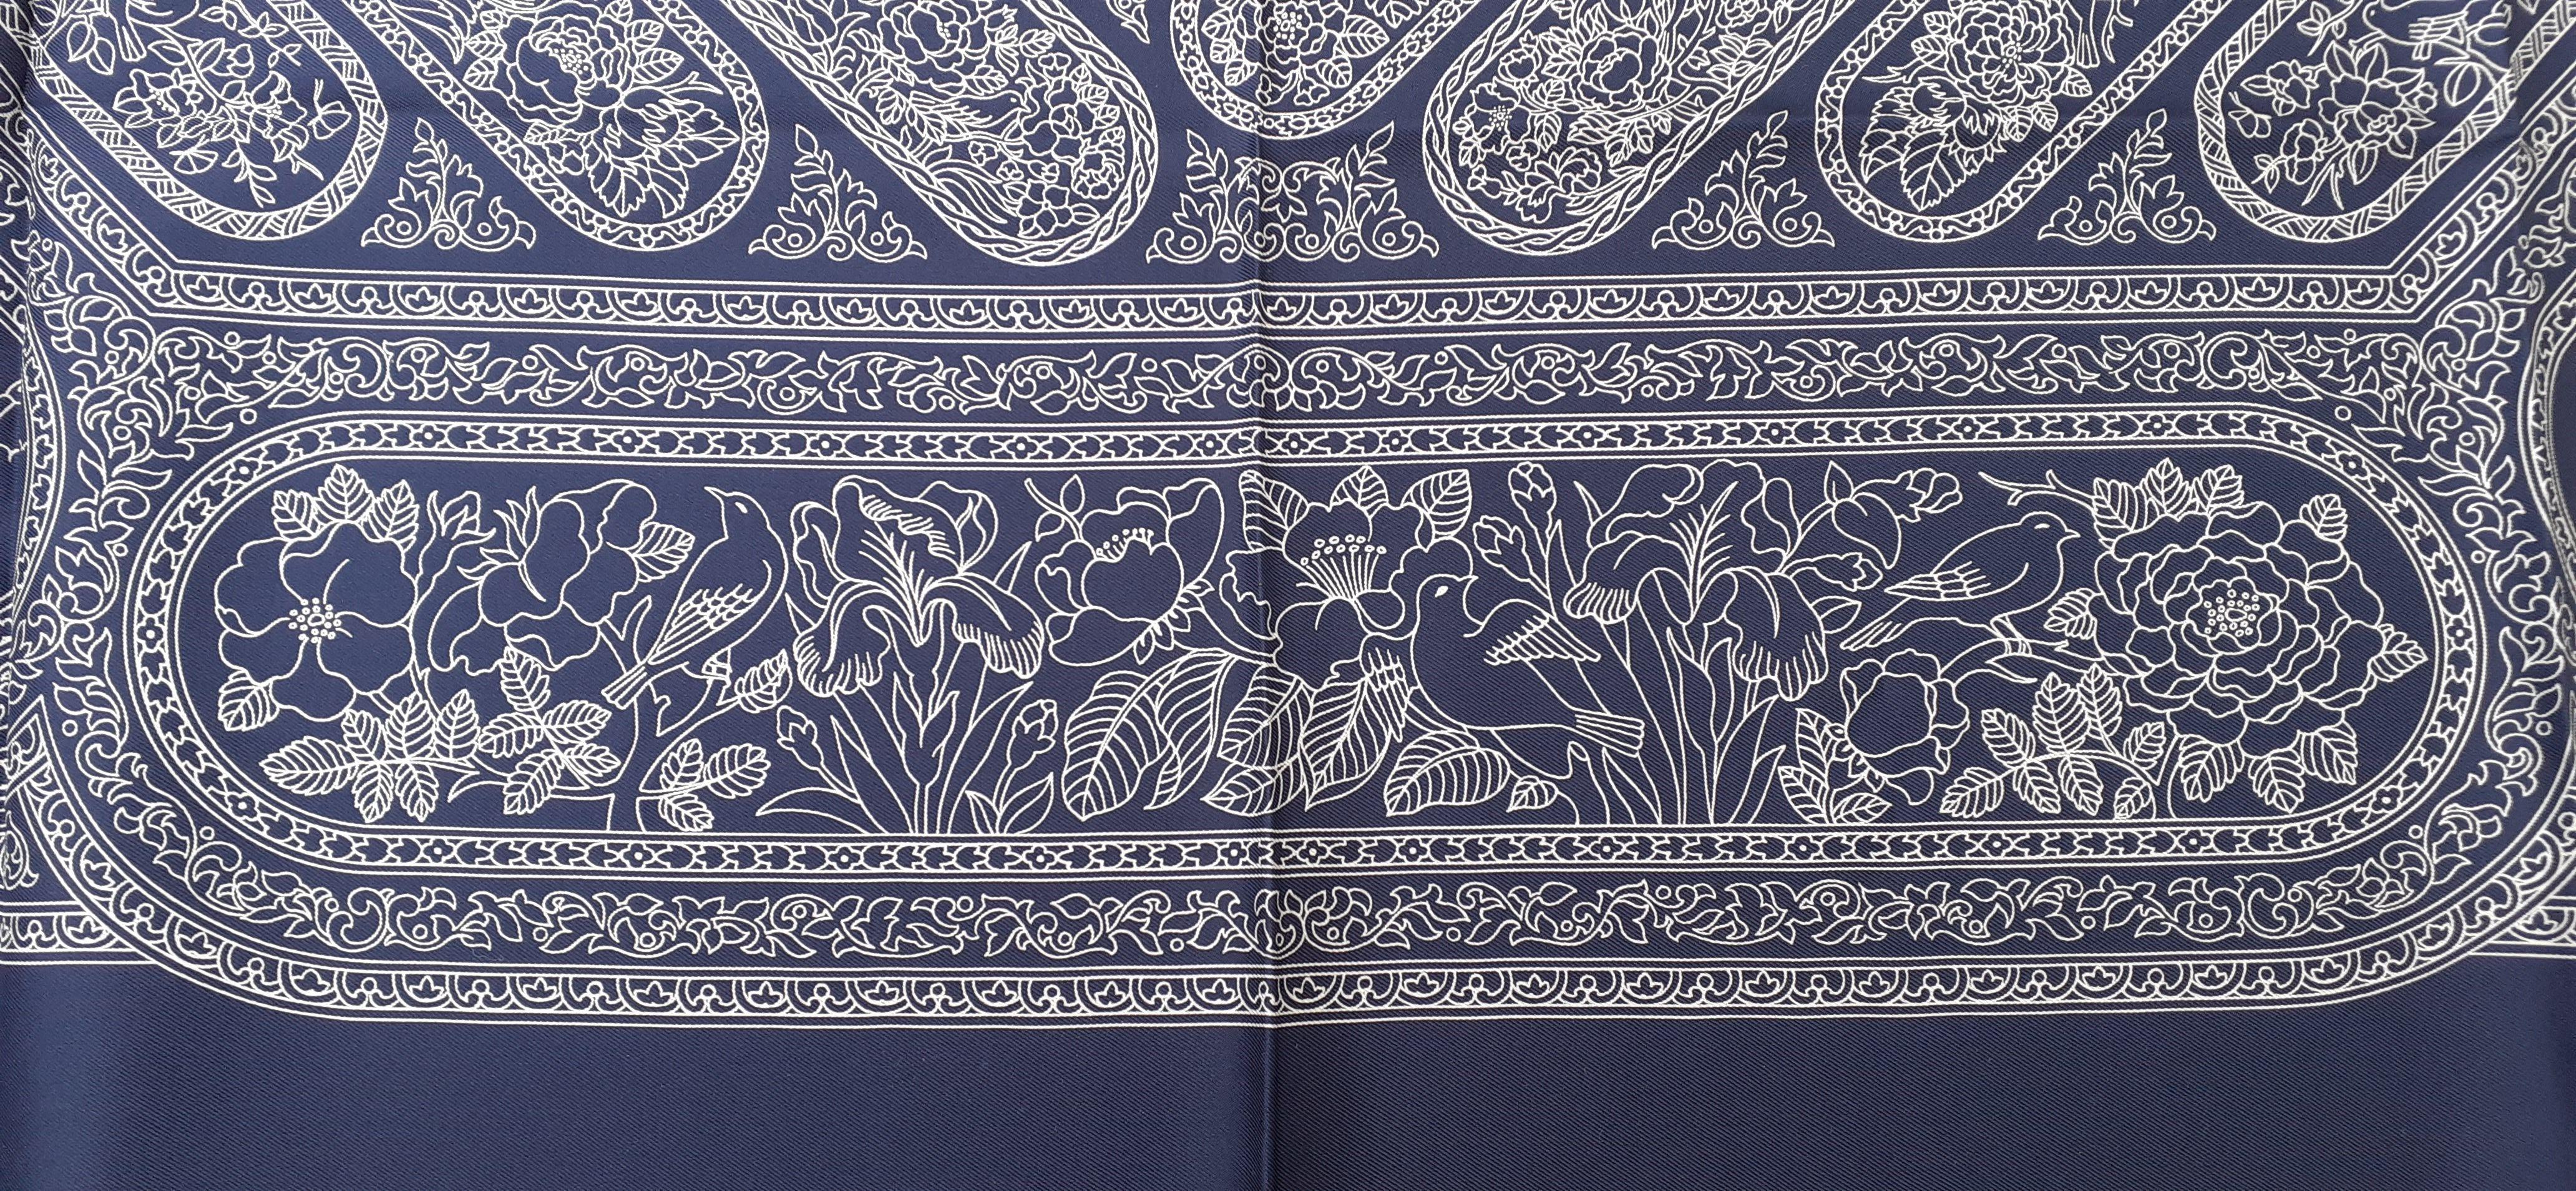 Gorgeous Hermès Silk Scarf Qalamdan Persian Iran Navy Blue 90 cm For Sale 3